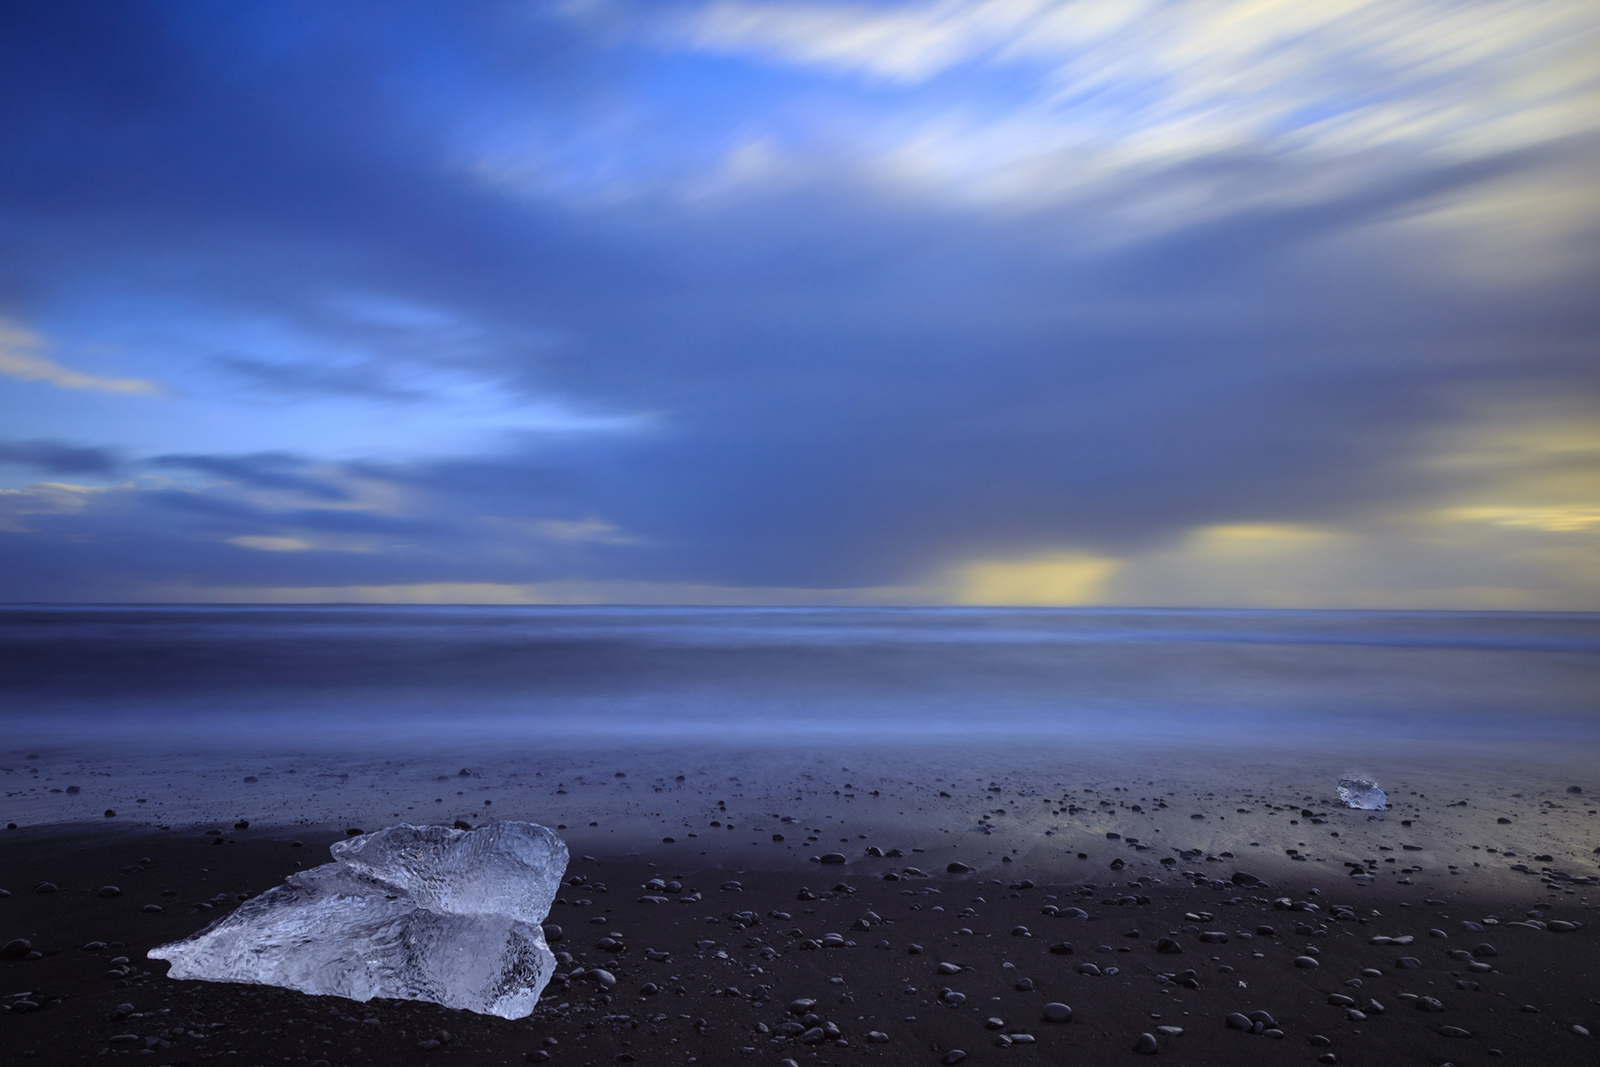 ICE ROCKS ON DIAMOND BEACH by Chris Houldsworth